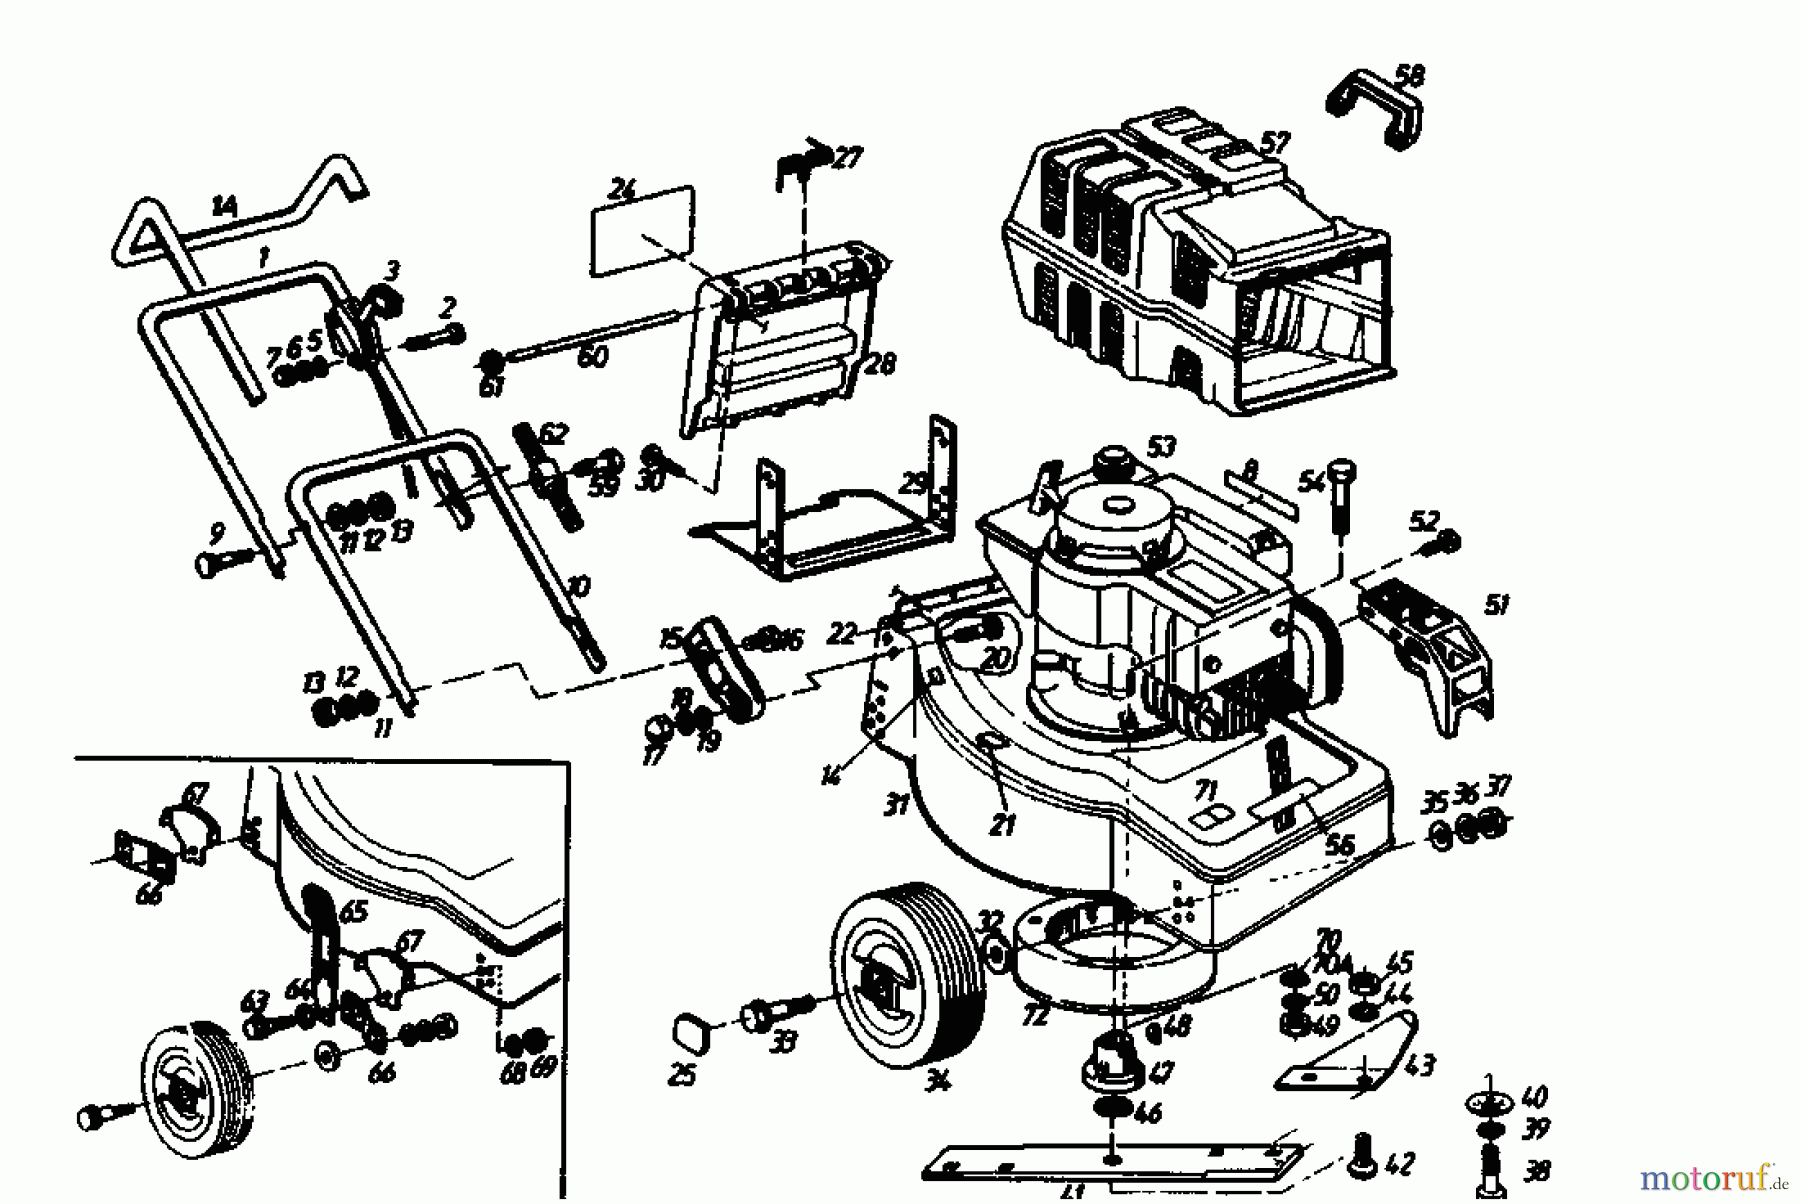  Golf Petrol mower Golf BS 02880.02  (1989) Basic machine